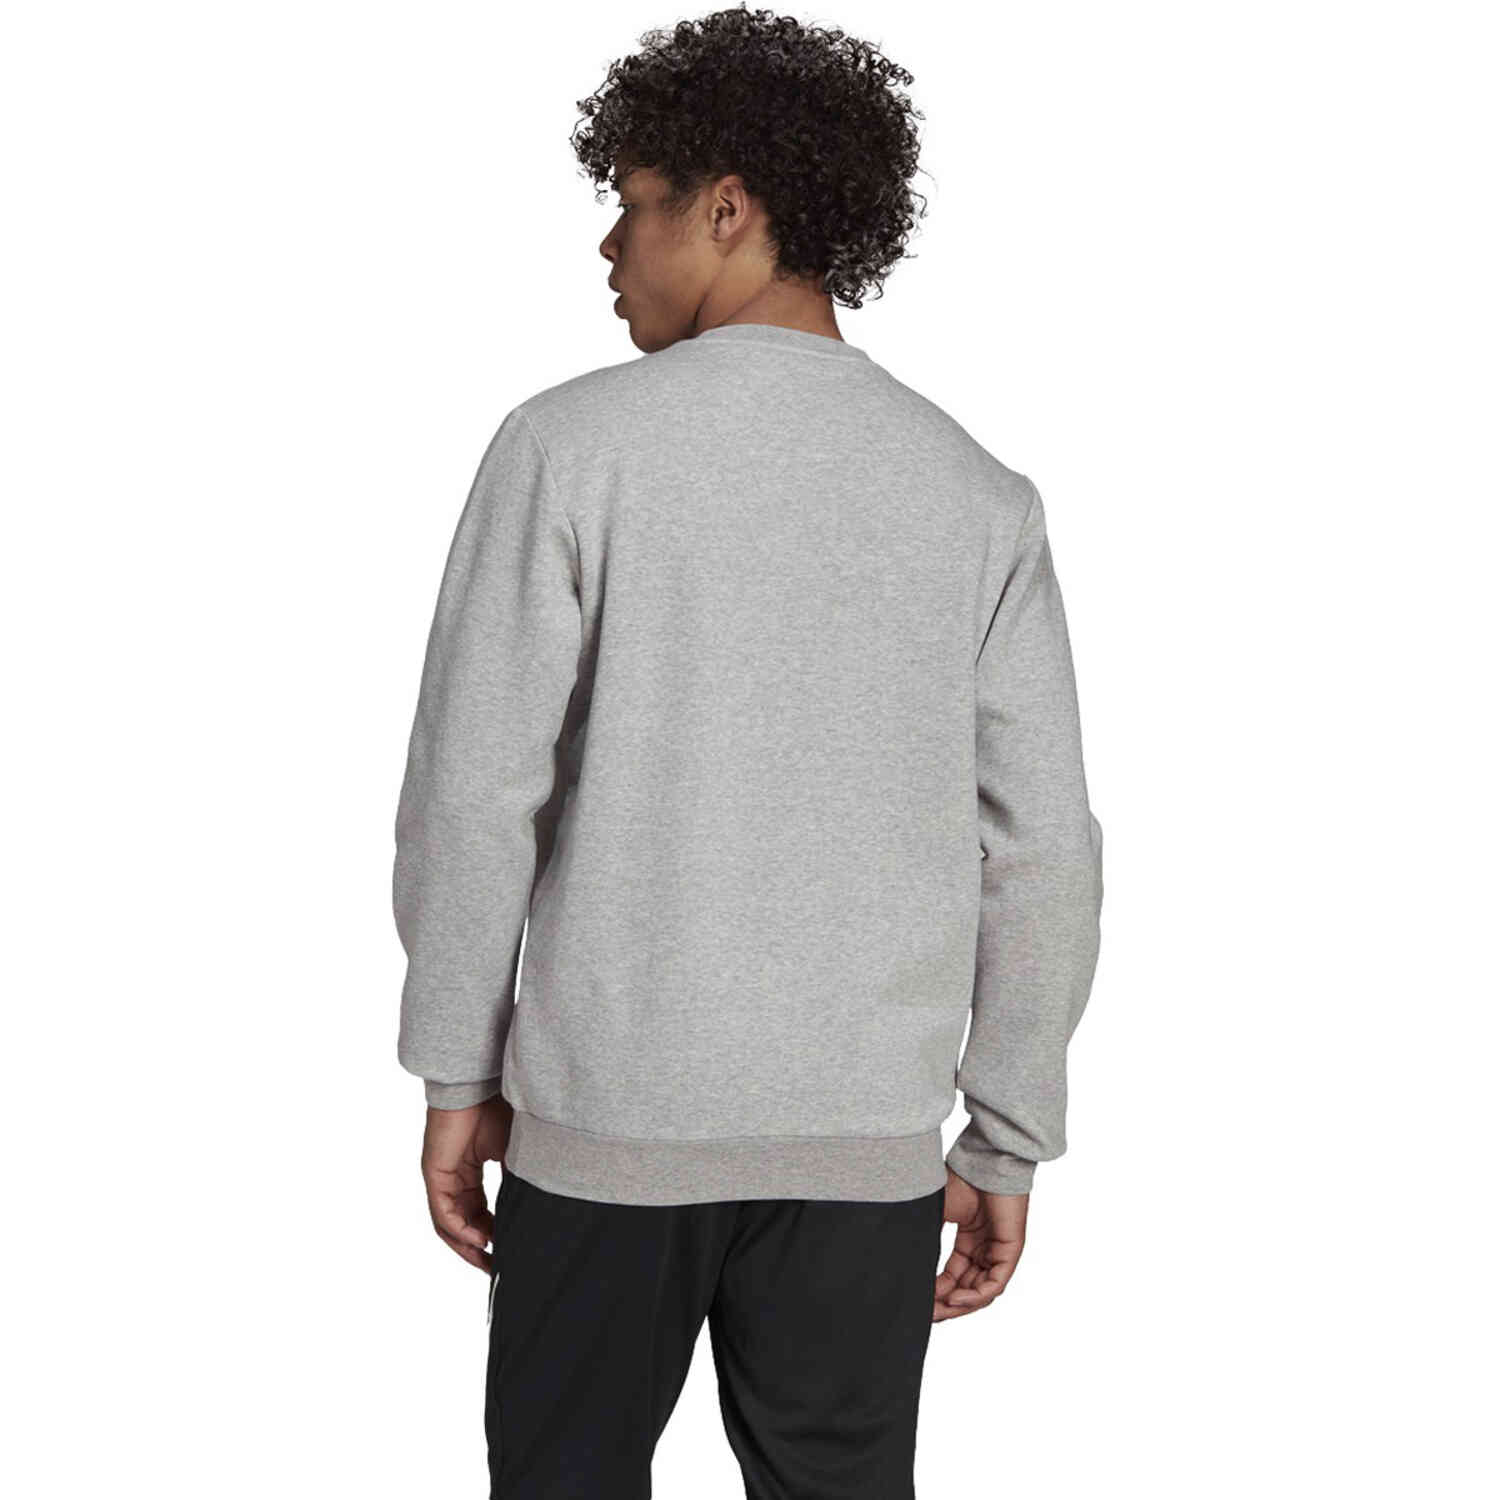 adidas Essentials Cozy Sweatshirt SoccerPro - Heather/Black Grey - Medium